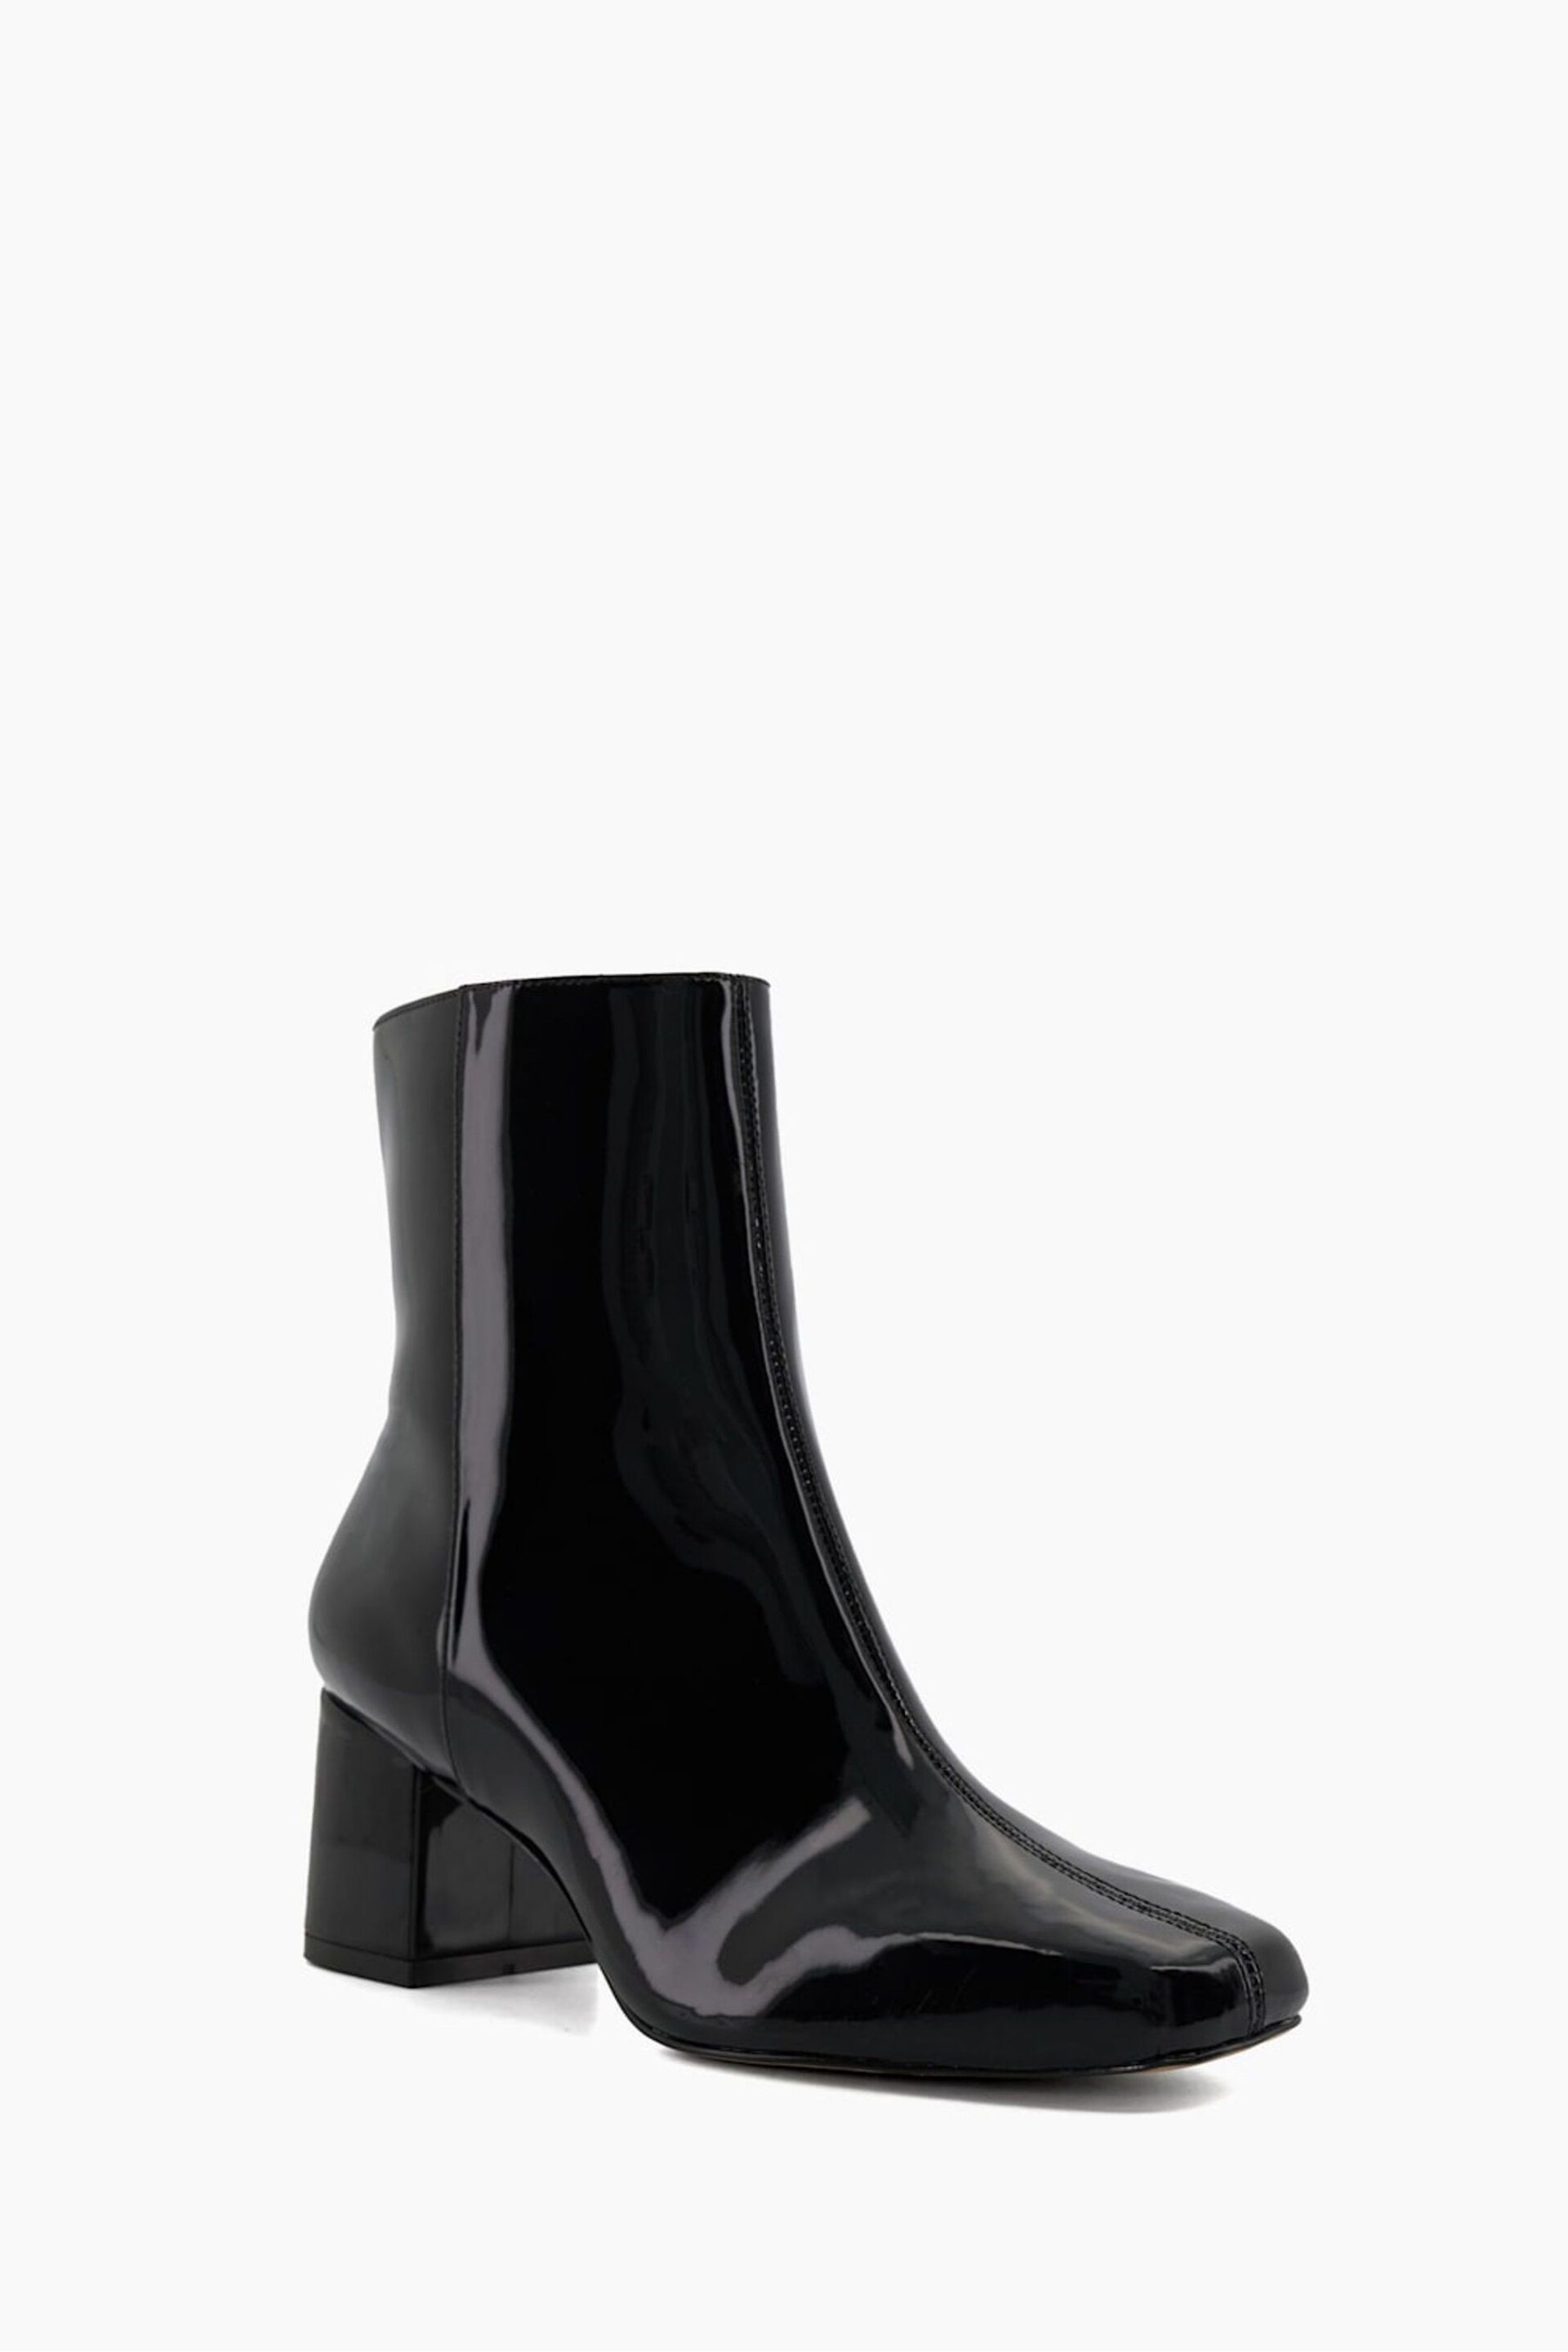 Dune London Black Branded Smart Block Heel Onsen Ankle Boots - Image 3 of 6